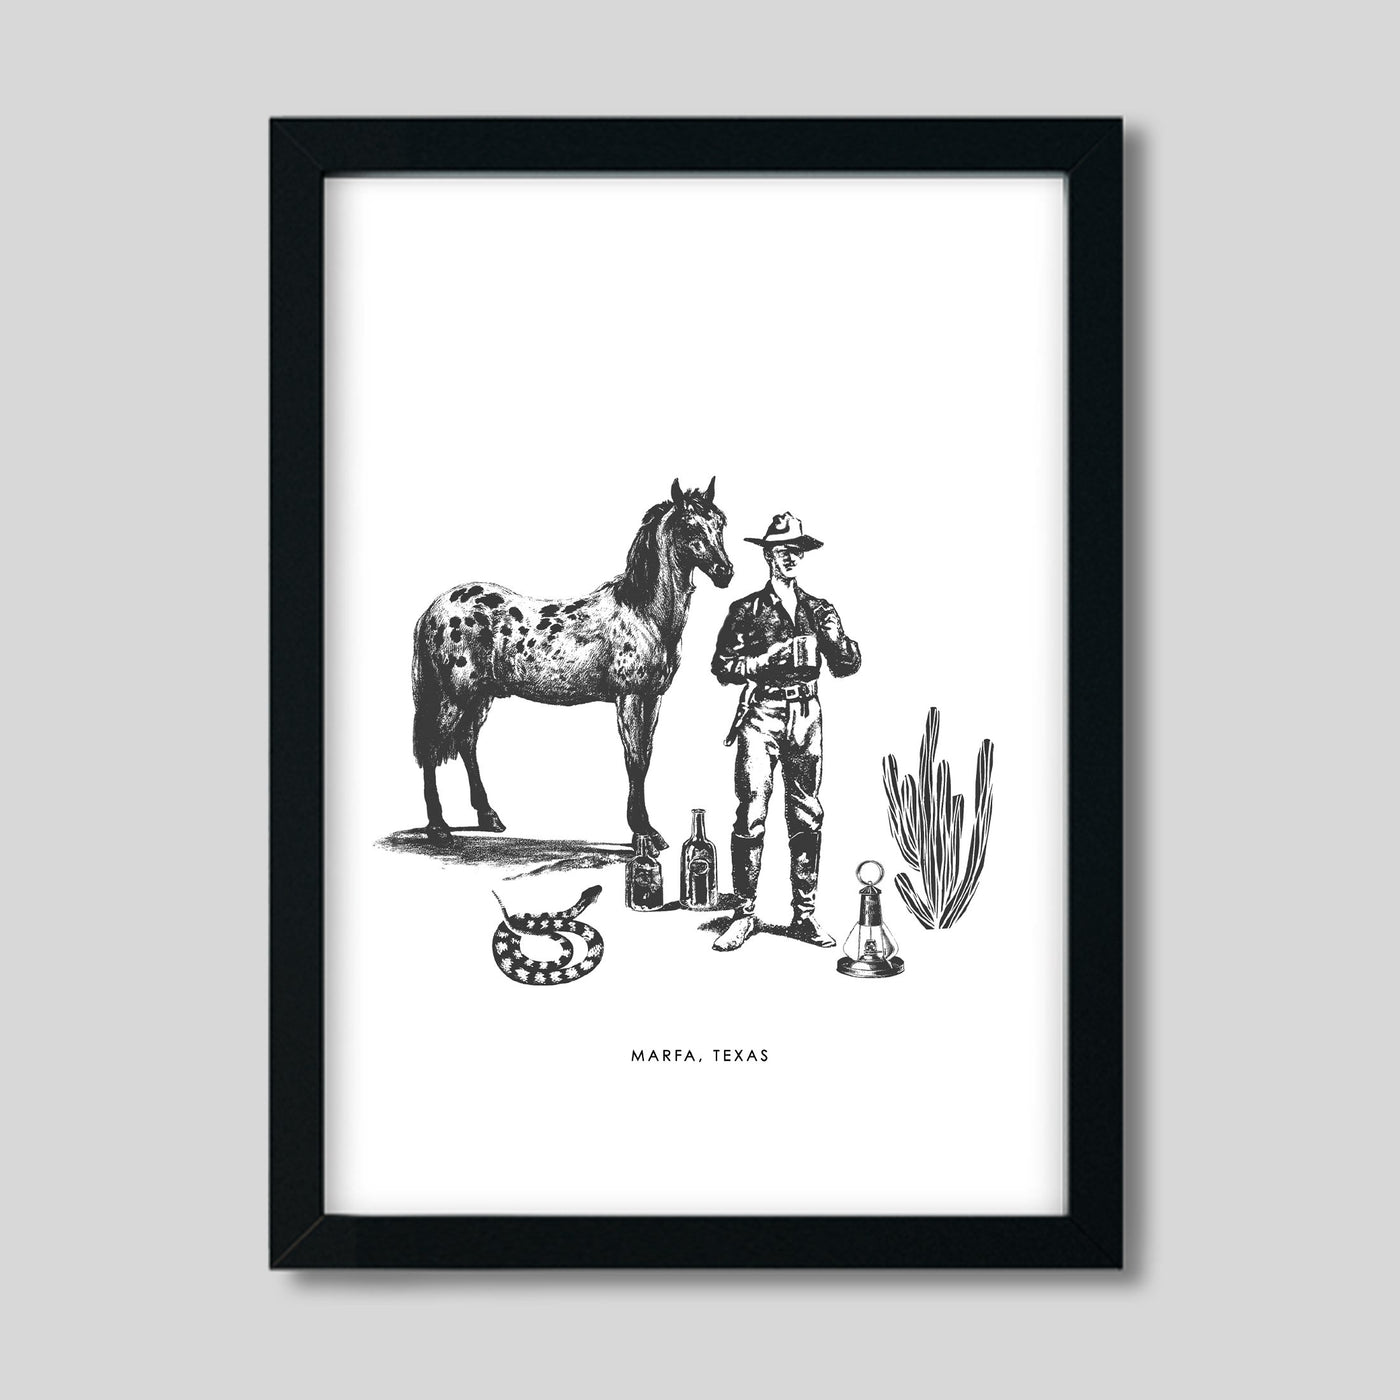 Gallery Prints Black / 8x10 / Black Frame Marfa Cowboy Print dombezalergii